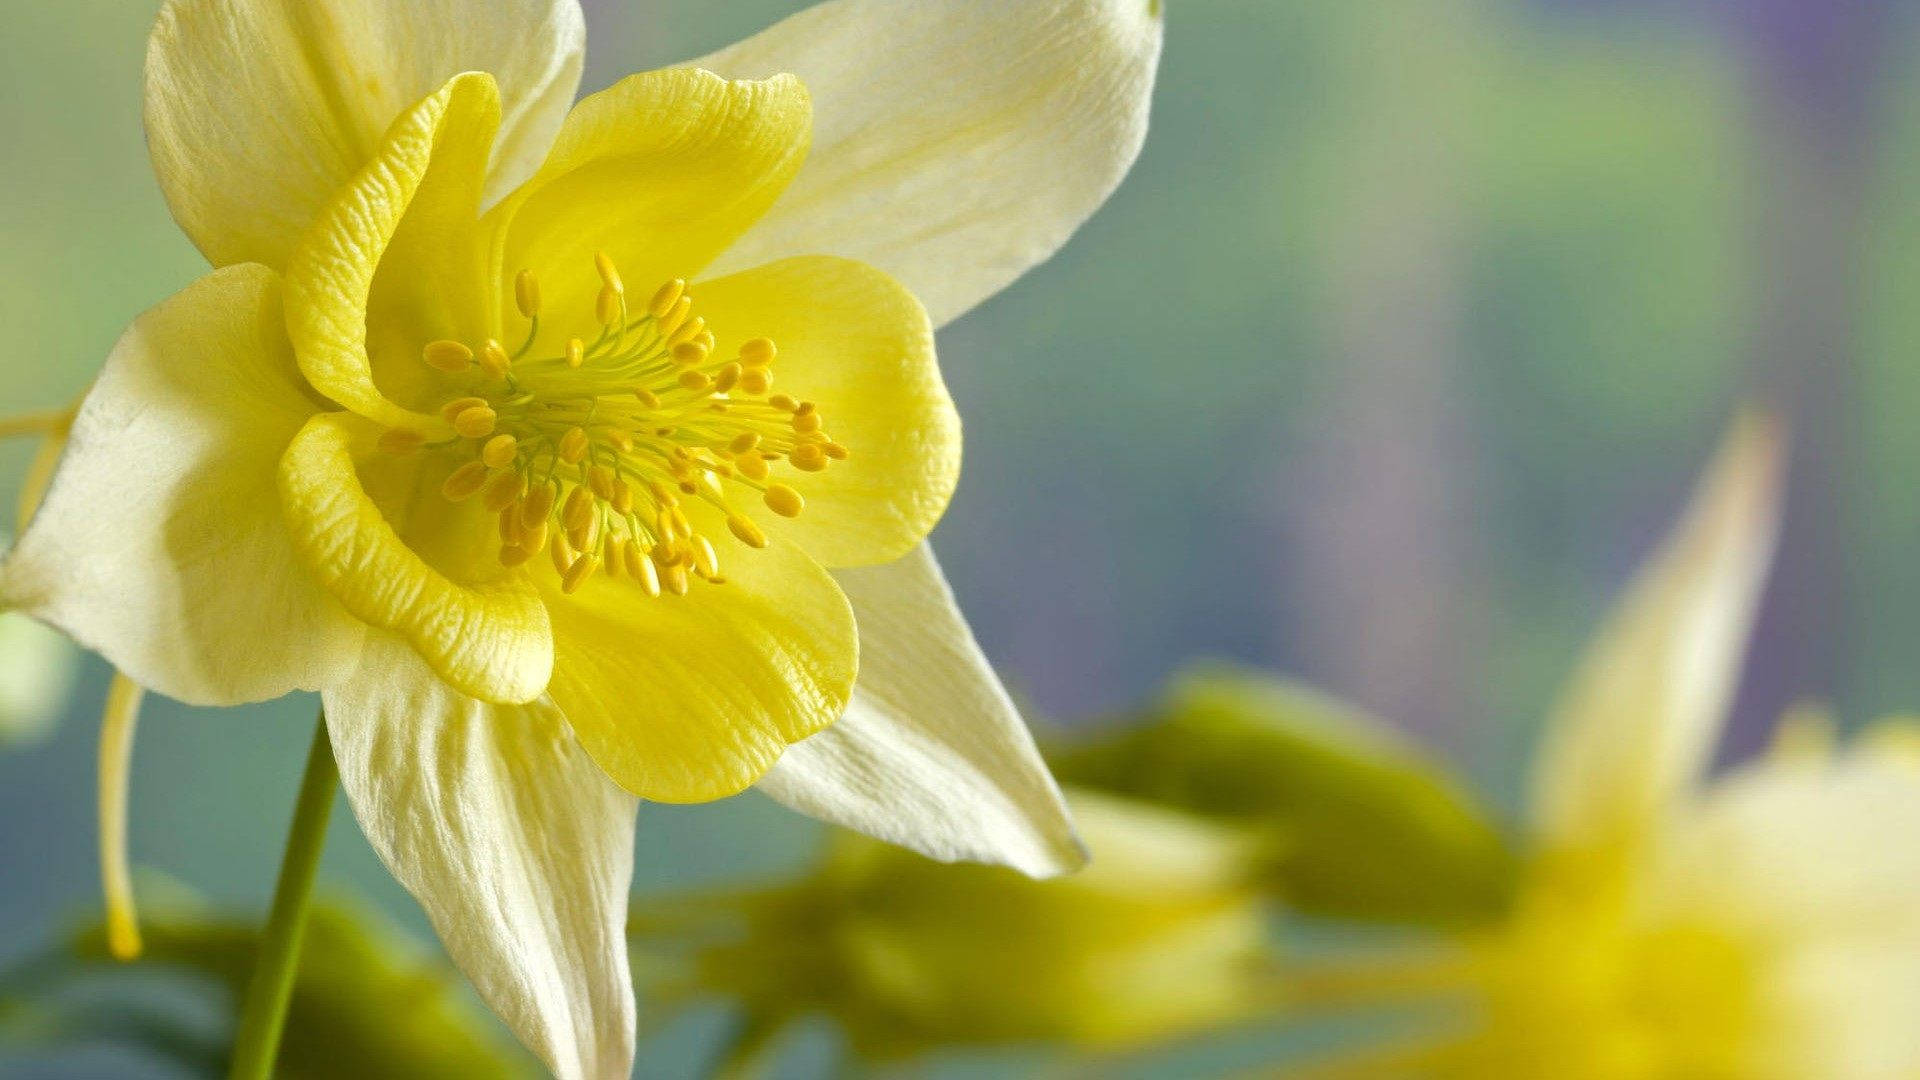 Pretty Daffodils Focus Blurred Background